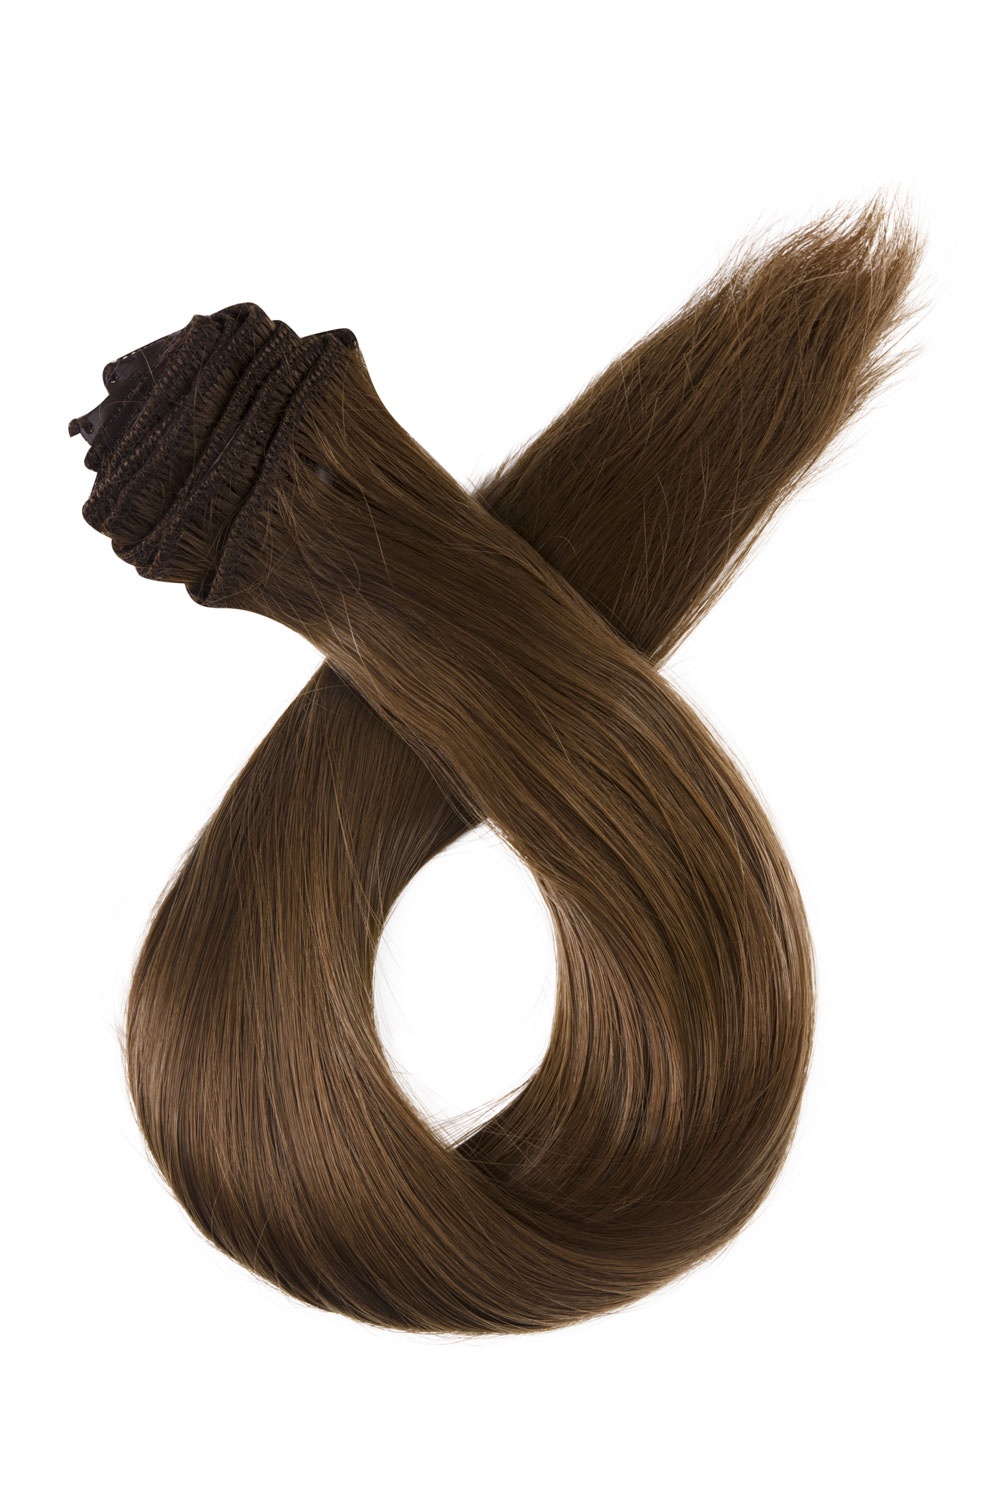 Svetlo gaštanovo hnedé clip-in vlasy, 60cm, 180g, farba 10